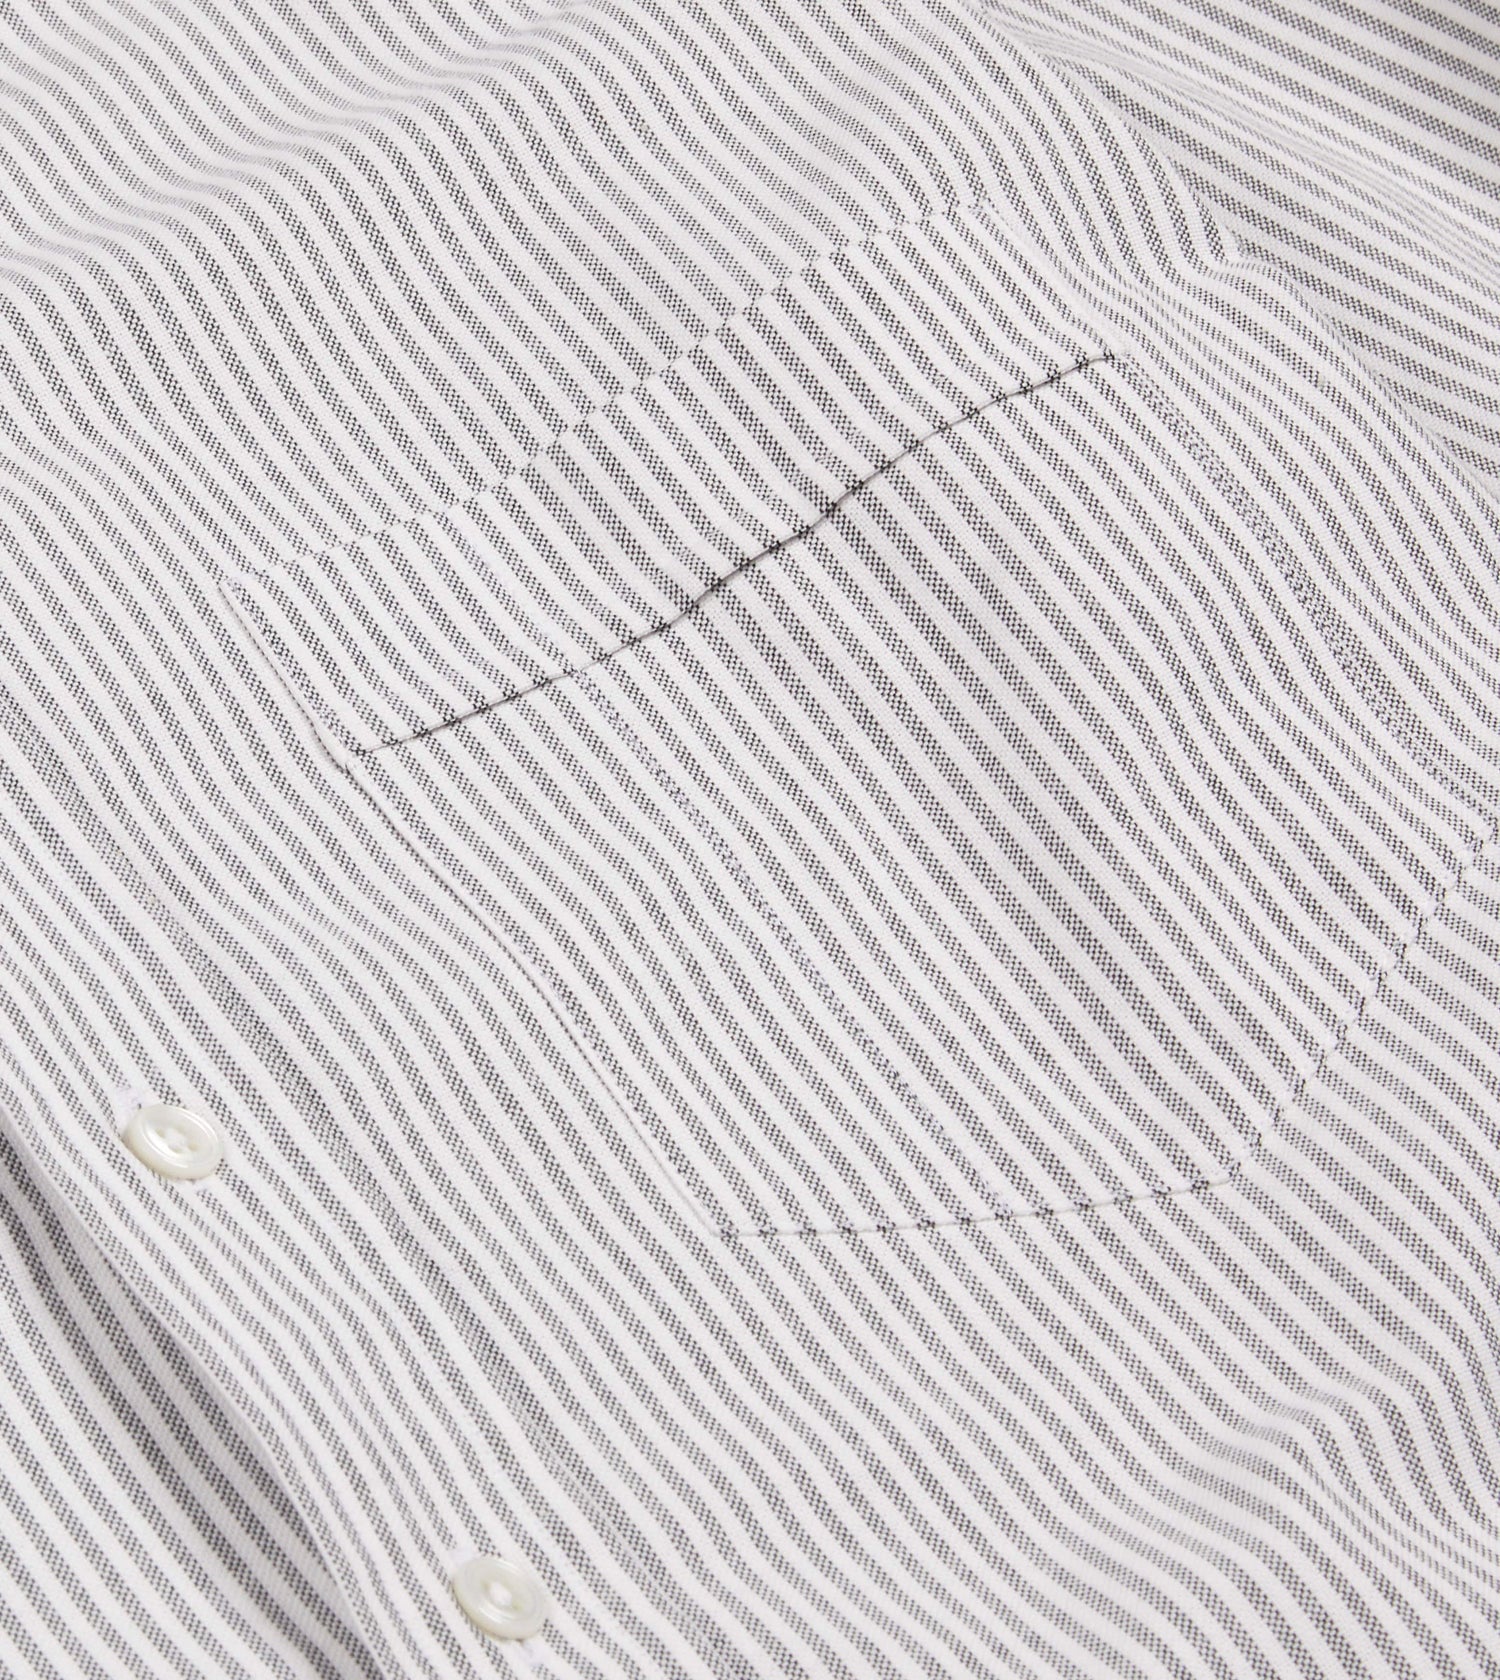 Black Ticking Stripe Cotton Oxford Cloth Button-Down Shirt